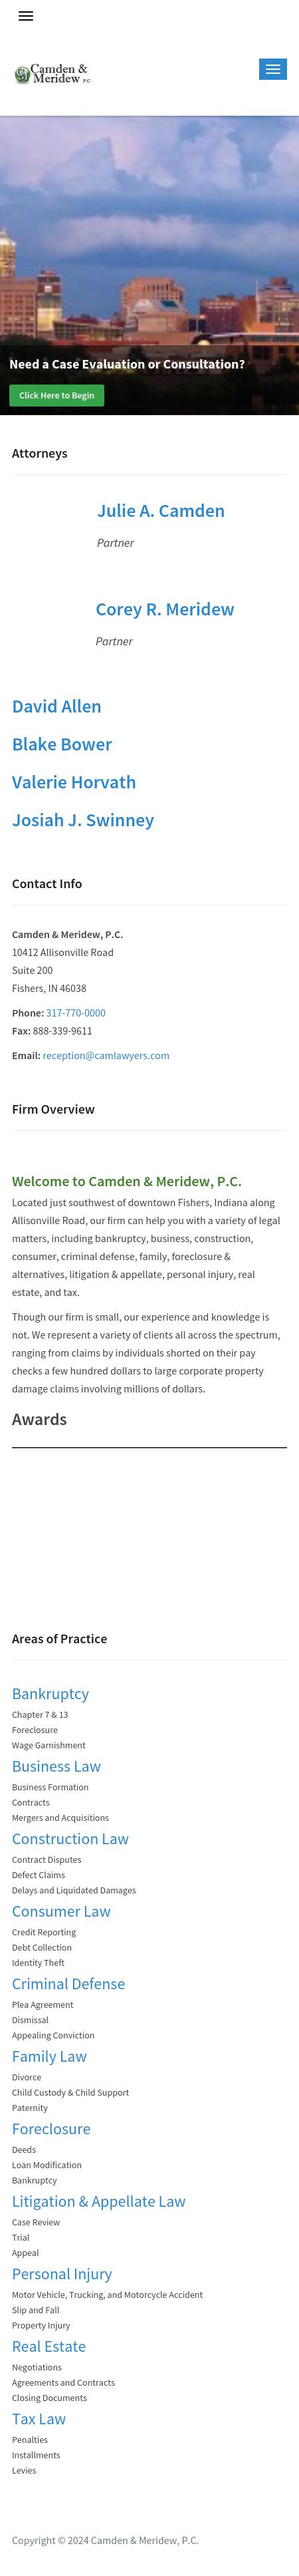 Camden & Associates P C - Fishers IN Lawyers